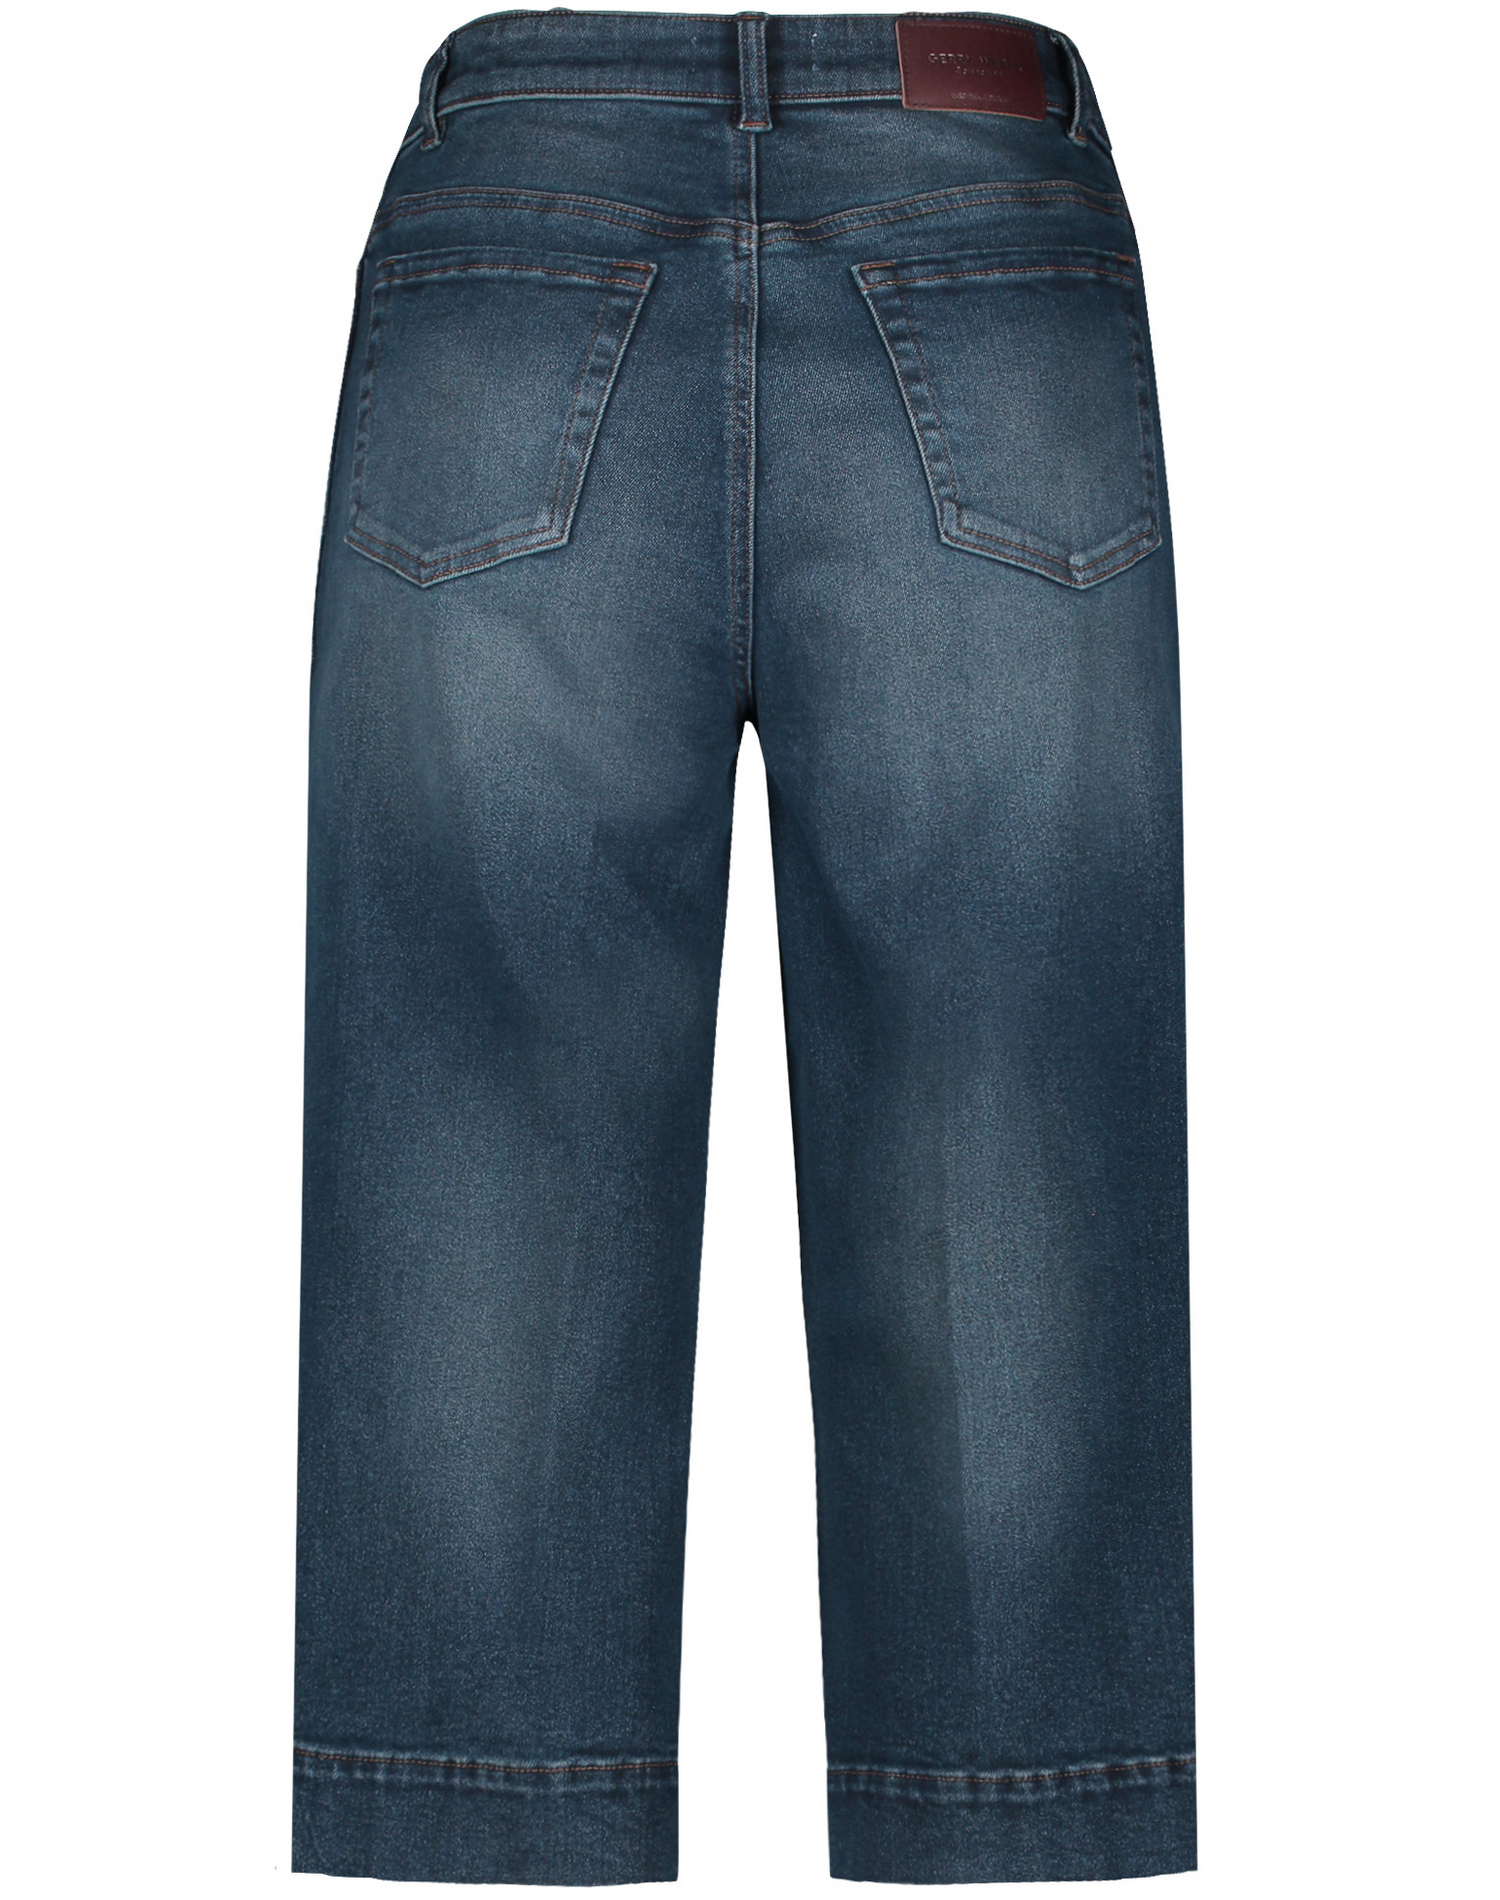 GERRY WEBER Jeans in Blau 